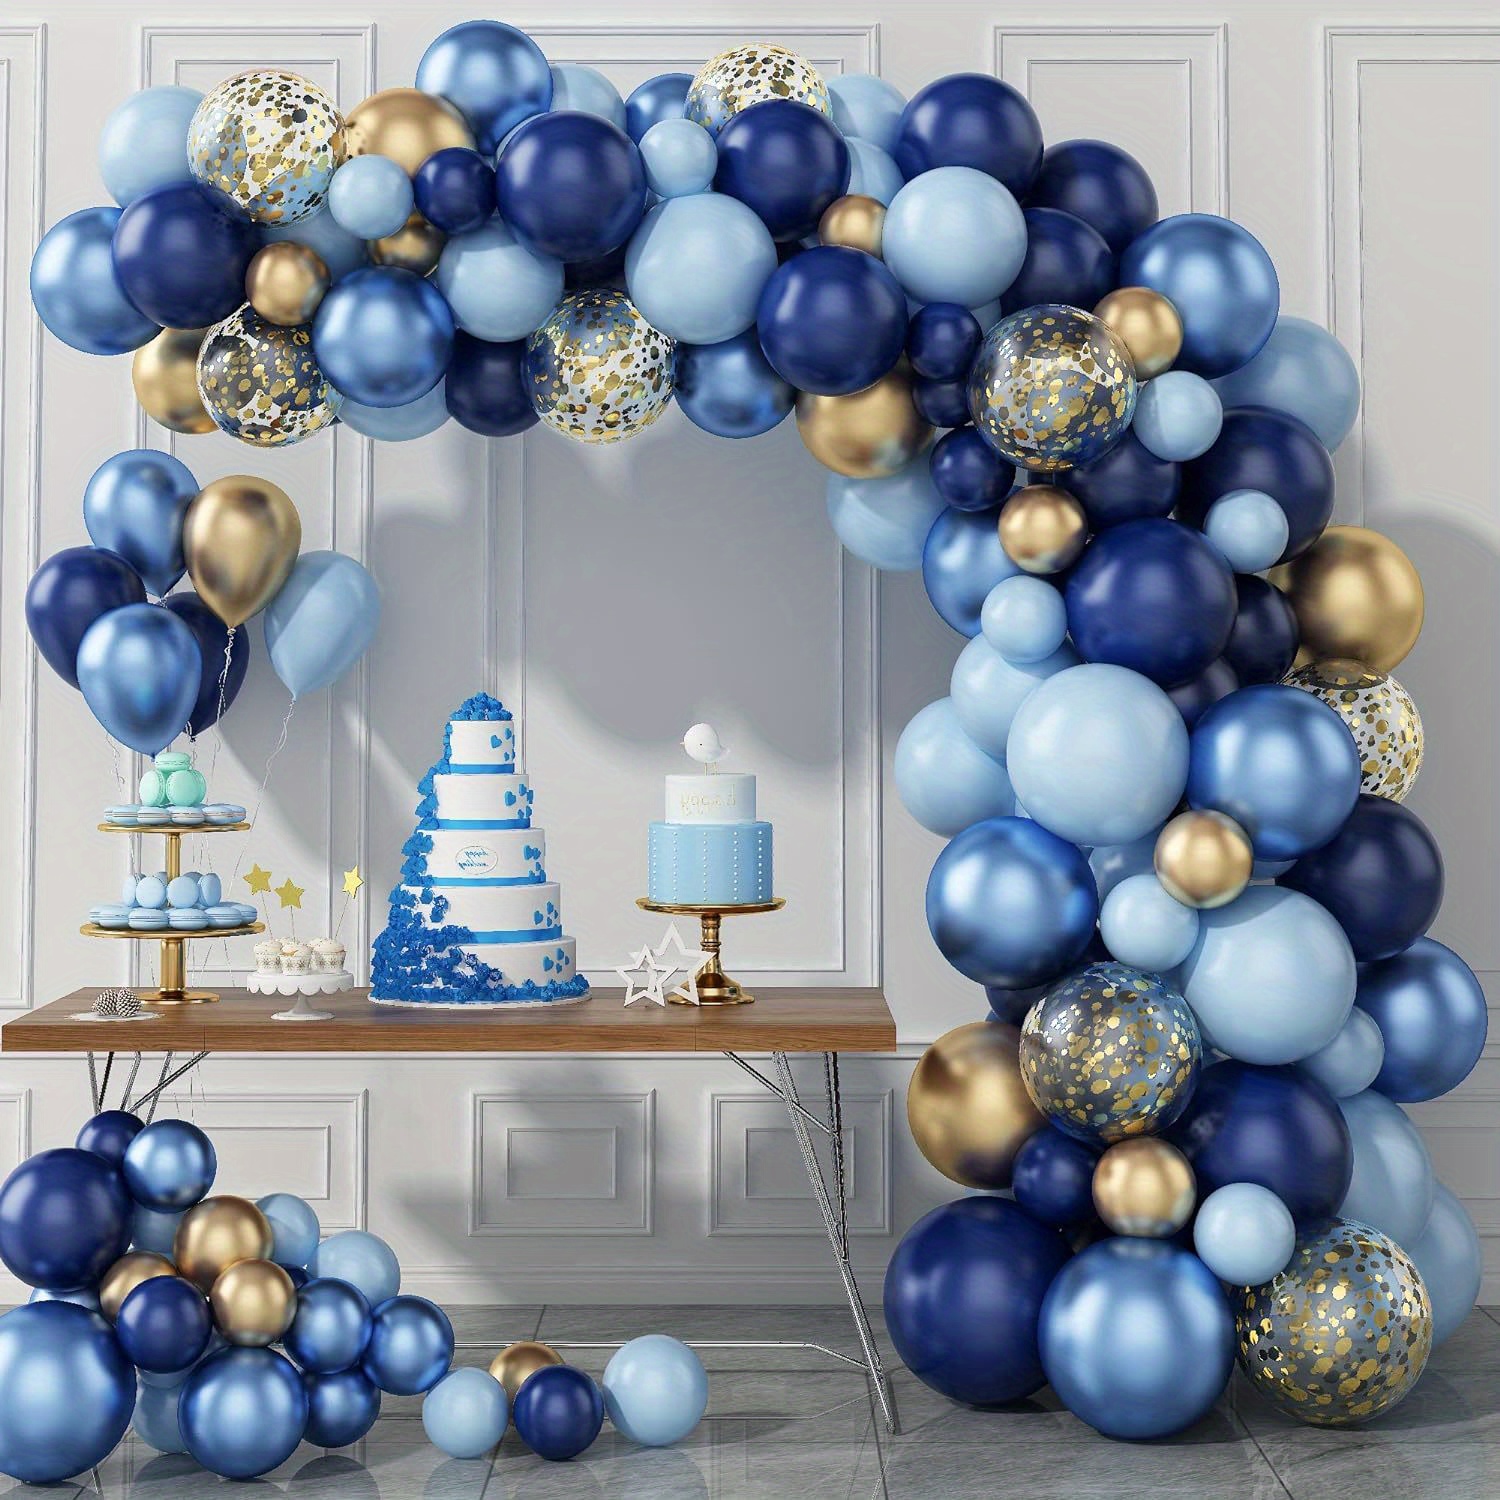 

97pcs Navy Blue Balloon Garland Arch Kit, Metallic Blue And Macaron Blue Balloons, Gold Confetti And Metallic Gold Balloons Arch For Birthday Party Decorations, Wedding, Bridal Shower, Baby Shower